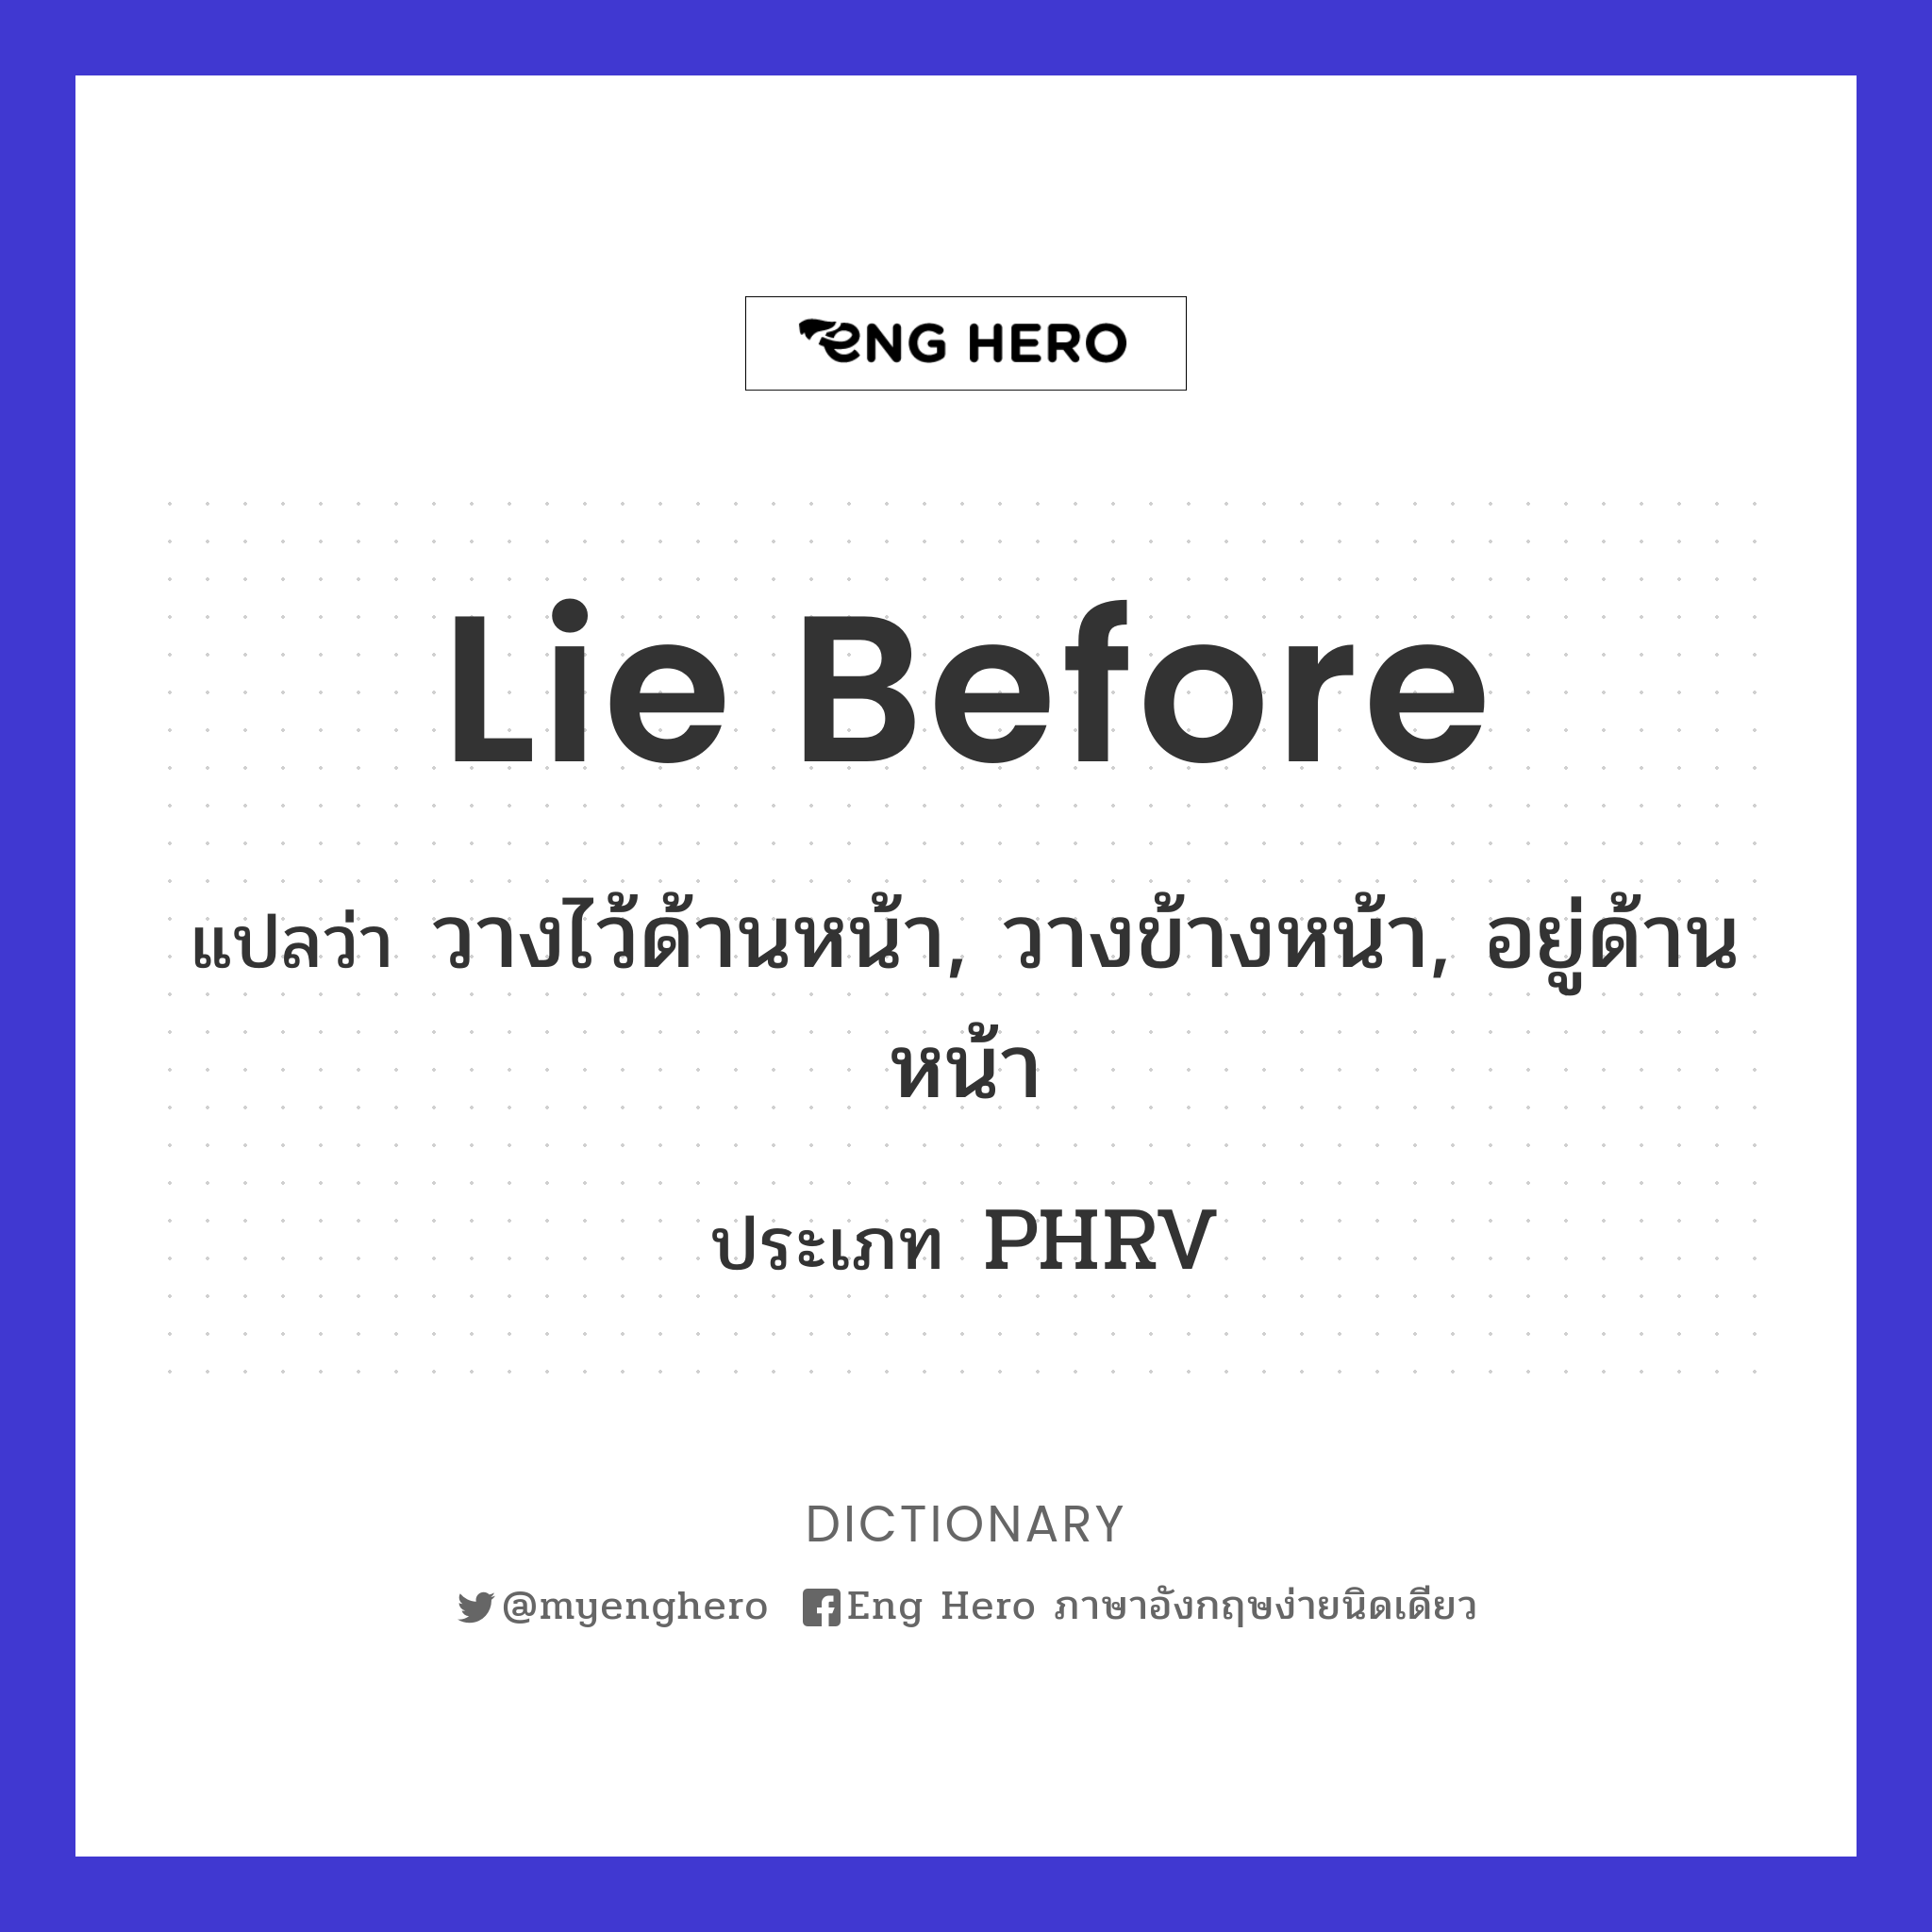 lie before